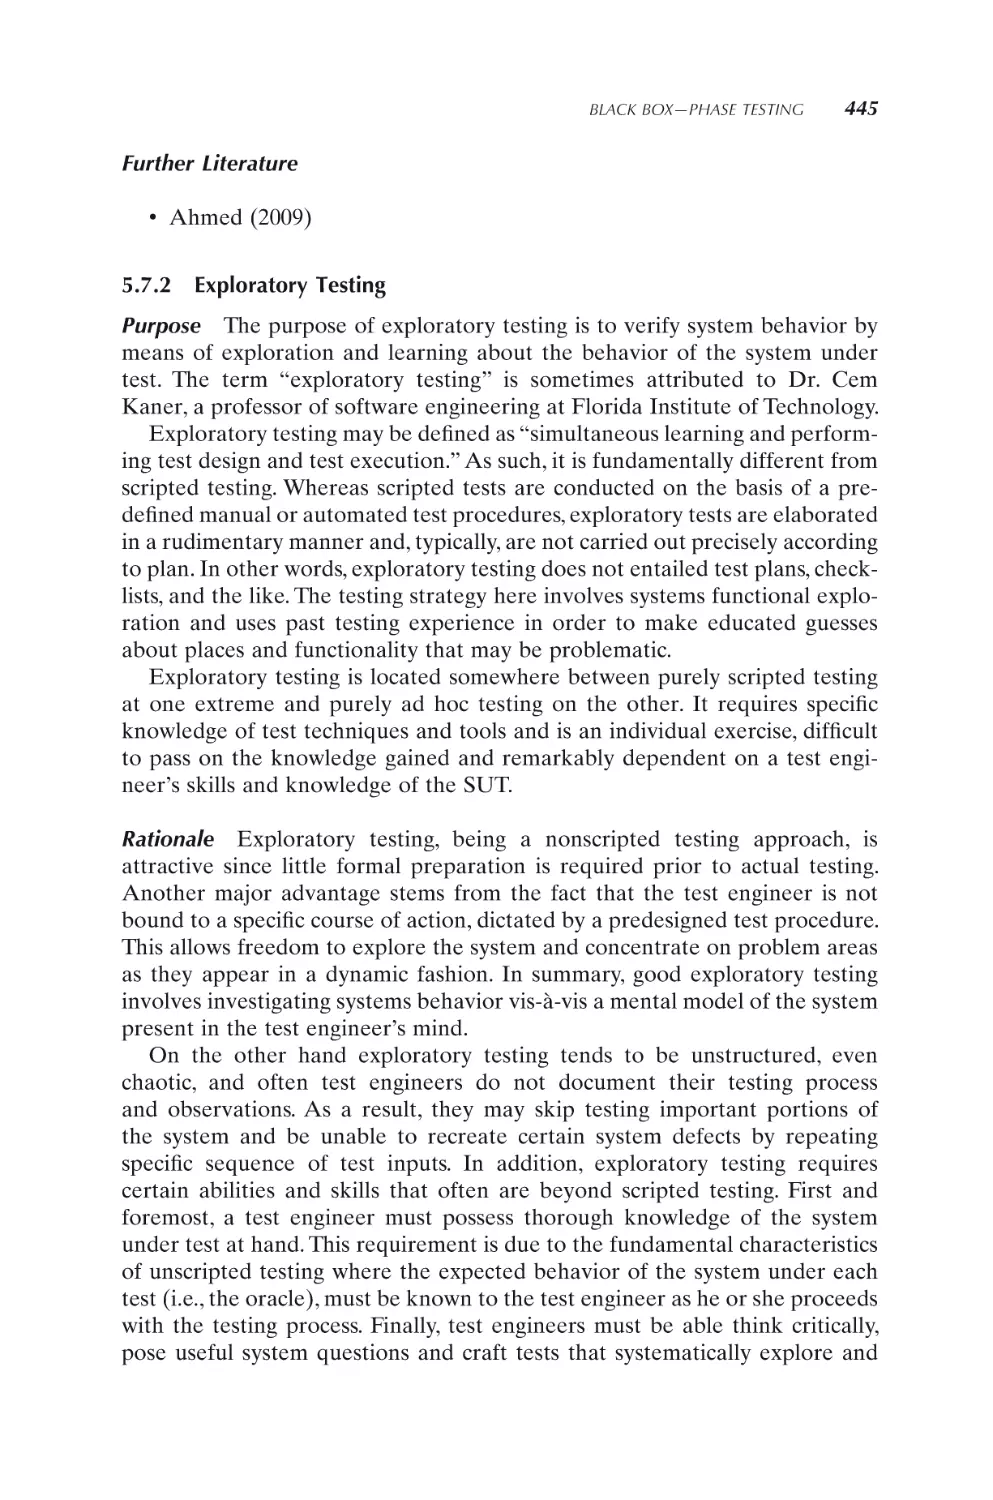 5.7.2 Exploratory Testing